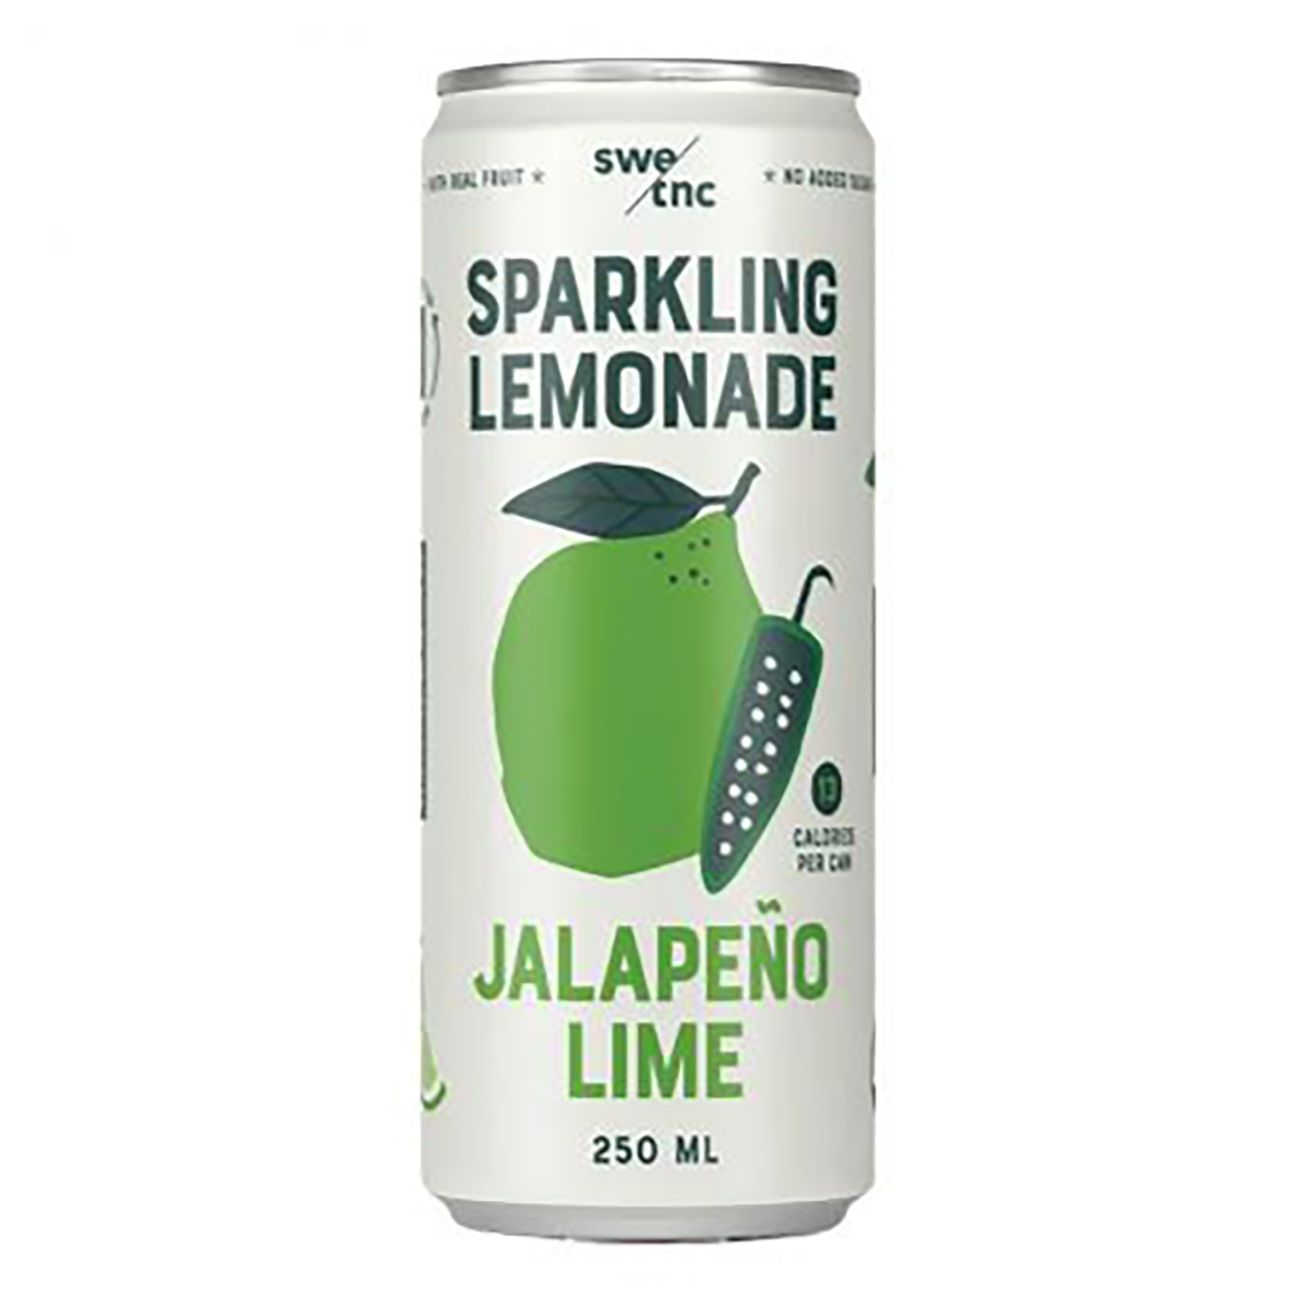 sparkling-lemonade-jalapeno-lime-95371-1